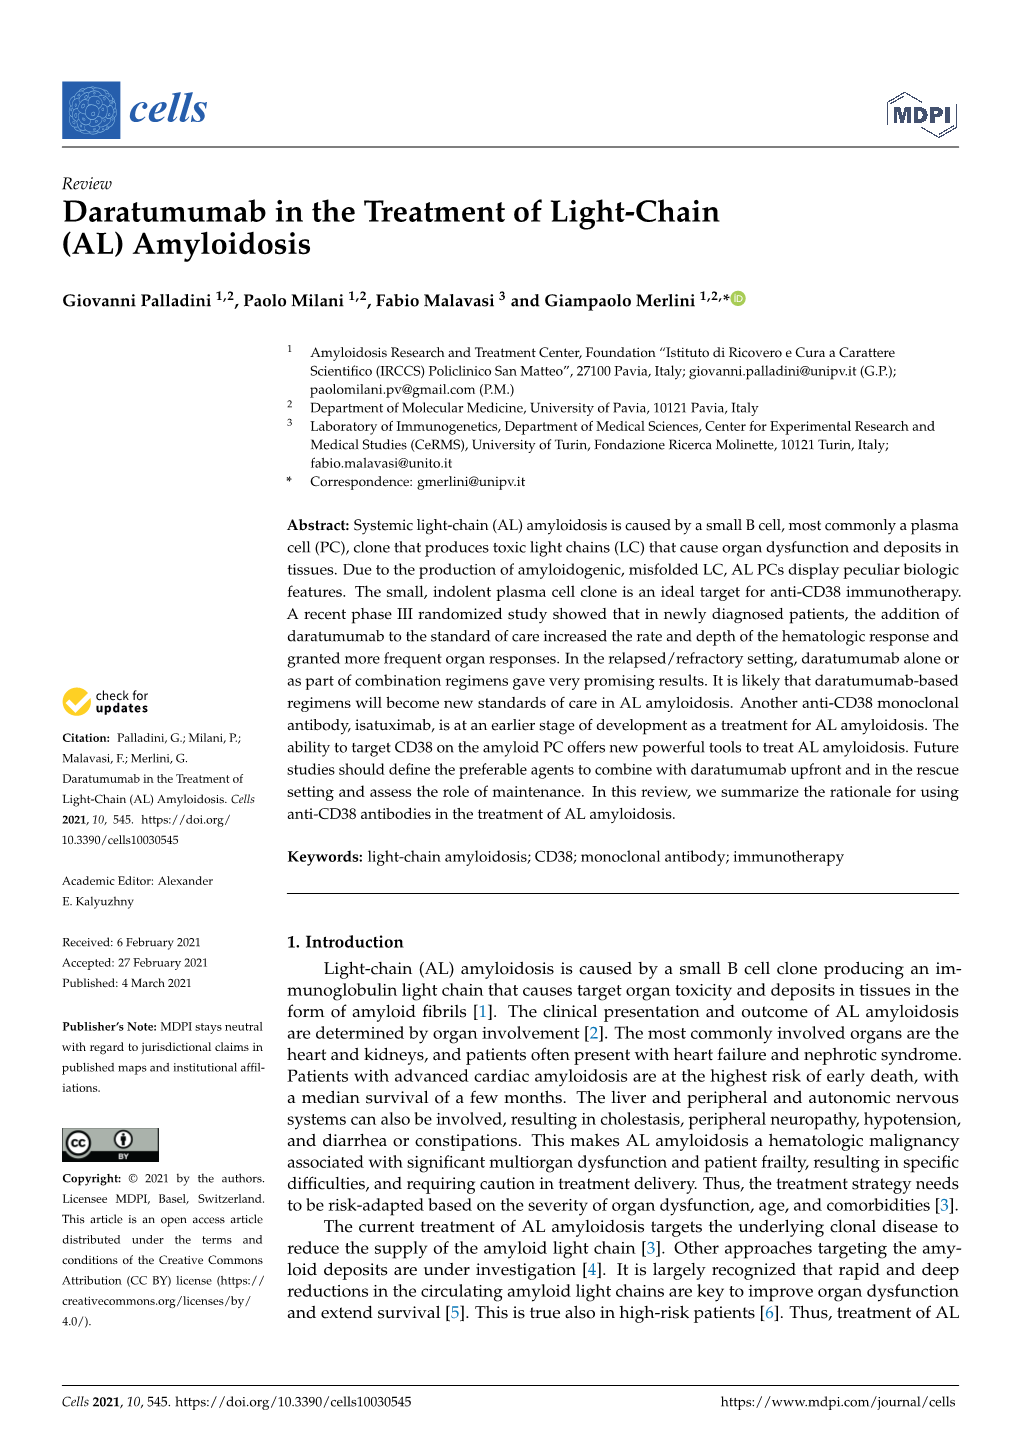 Daratumumab in the Treatment of Light-Chain(AL) Amyloidosis